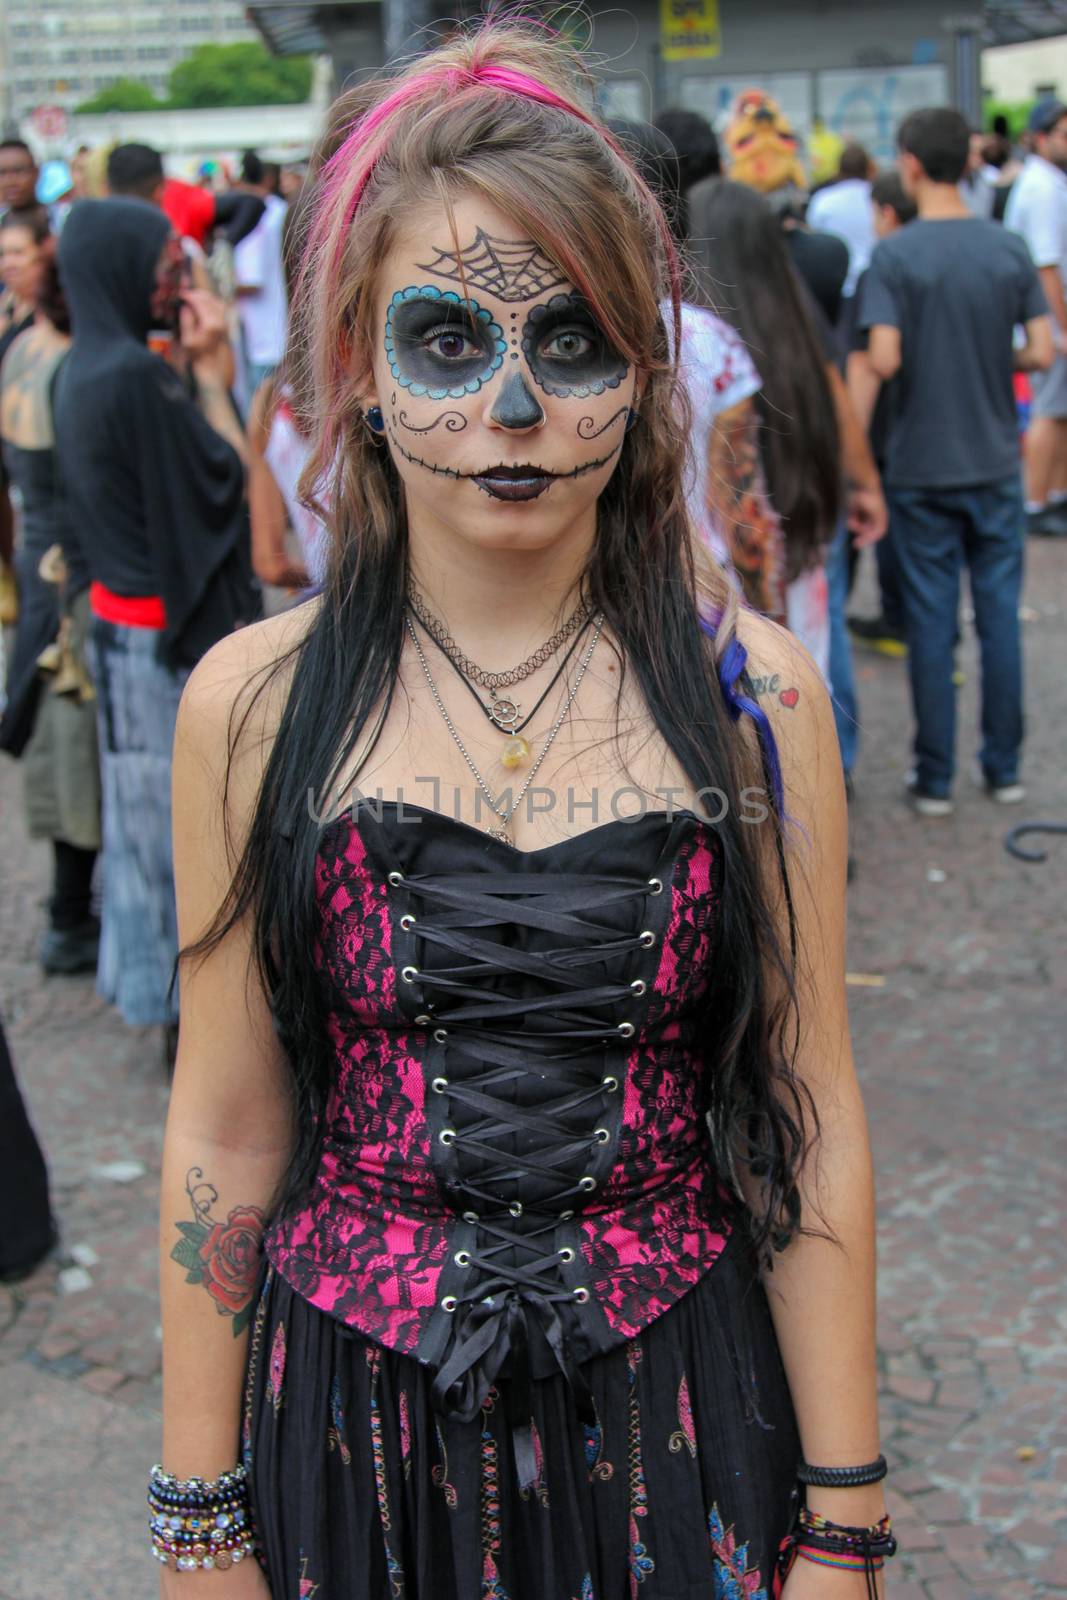 Beautiful girl in costumes in Zombie Walk Sao Paulo by marphotography